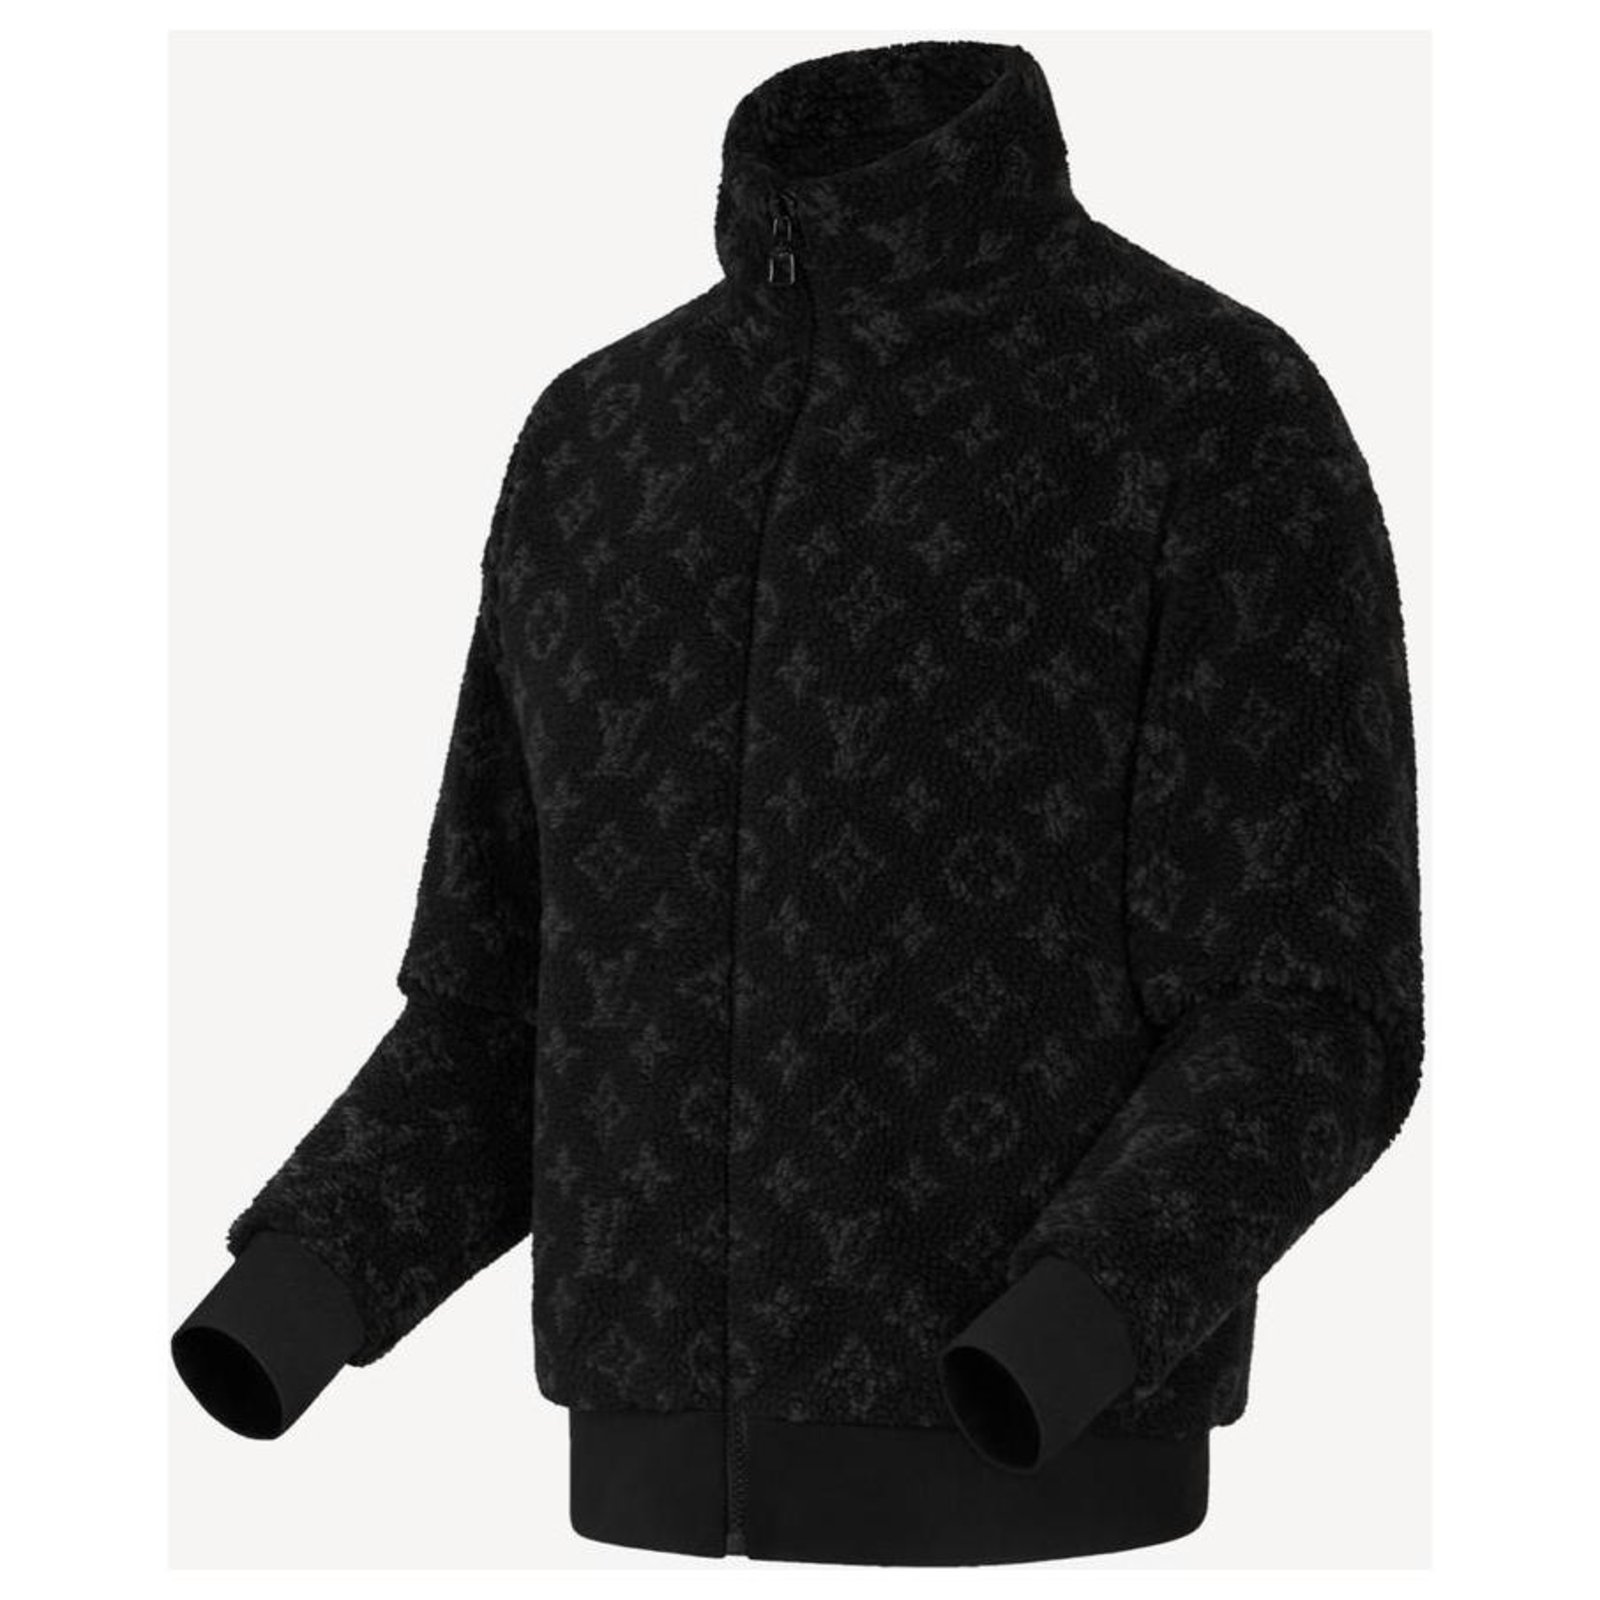 Louis Vuitton Teddy giacca con zip in pile jacquard nero grande da